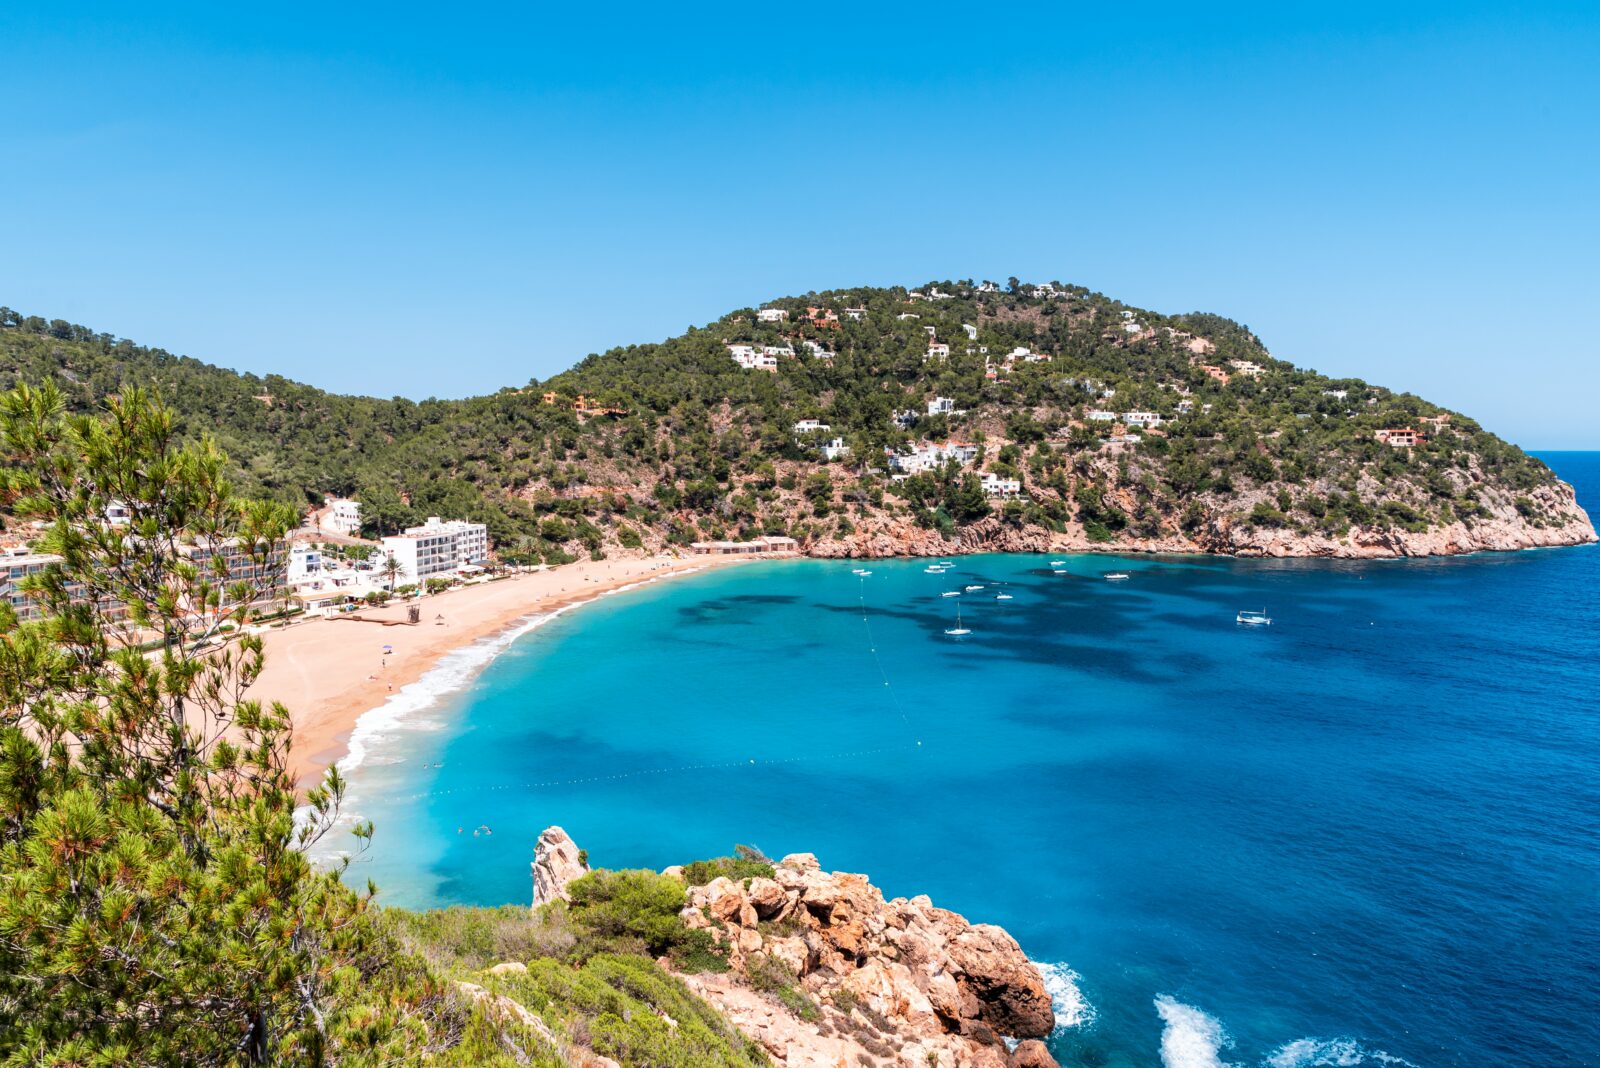 cove and seaside resort in Ibiza